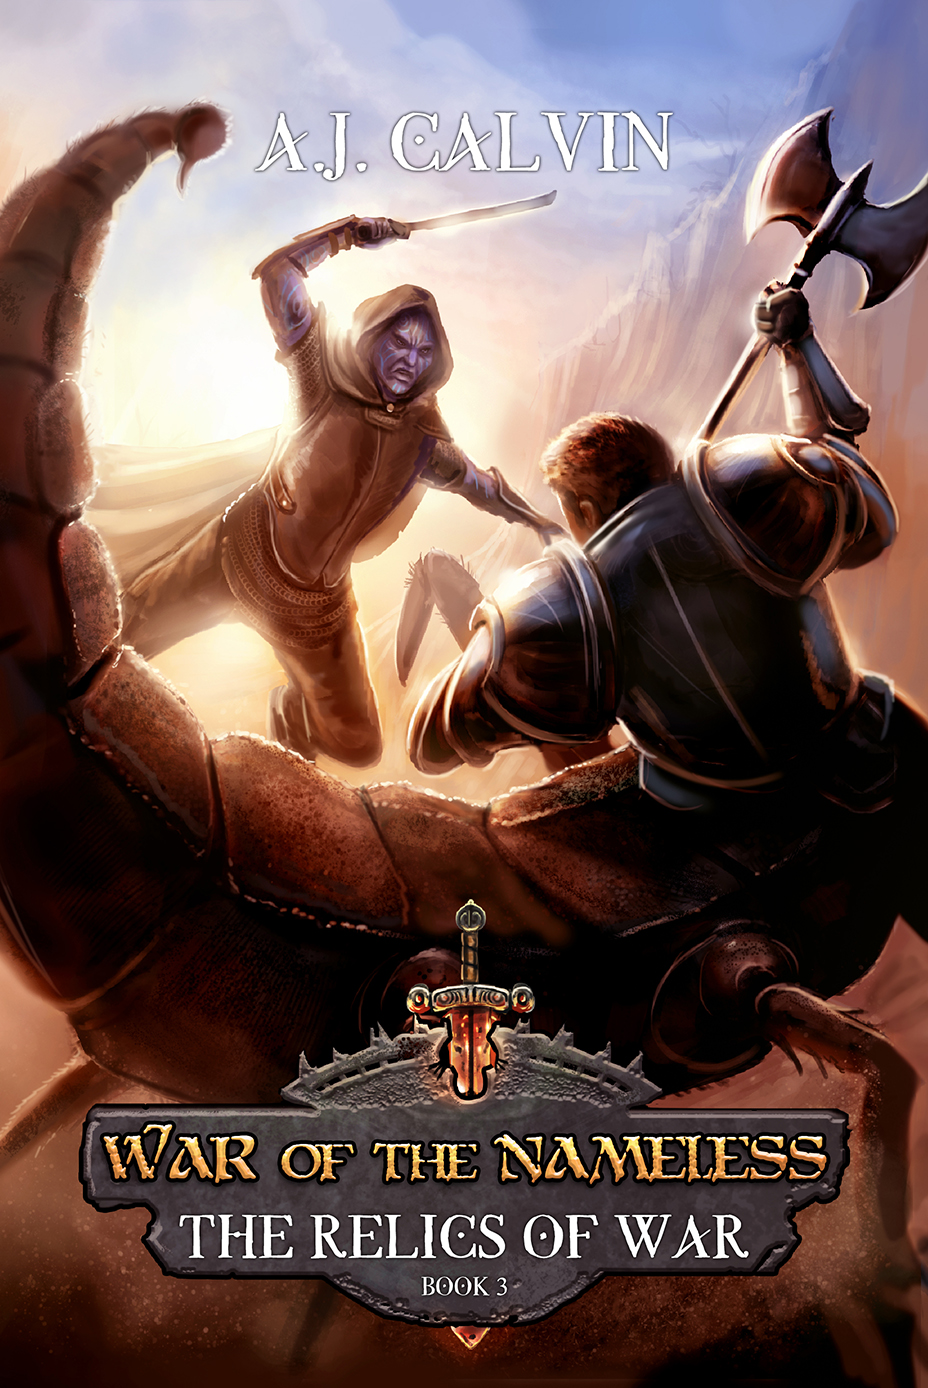 War of the Nameless fantasy book cover AJ Calvin, art by Jamie Noble Frier